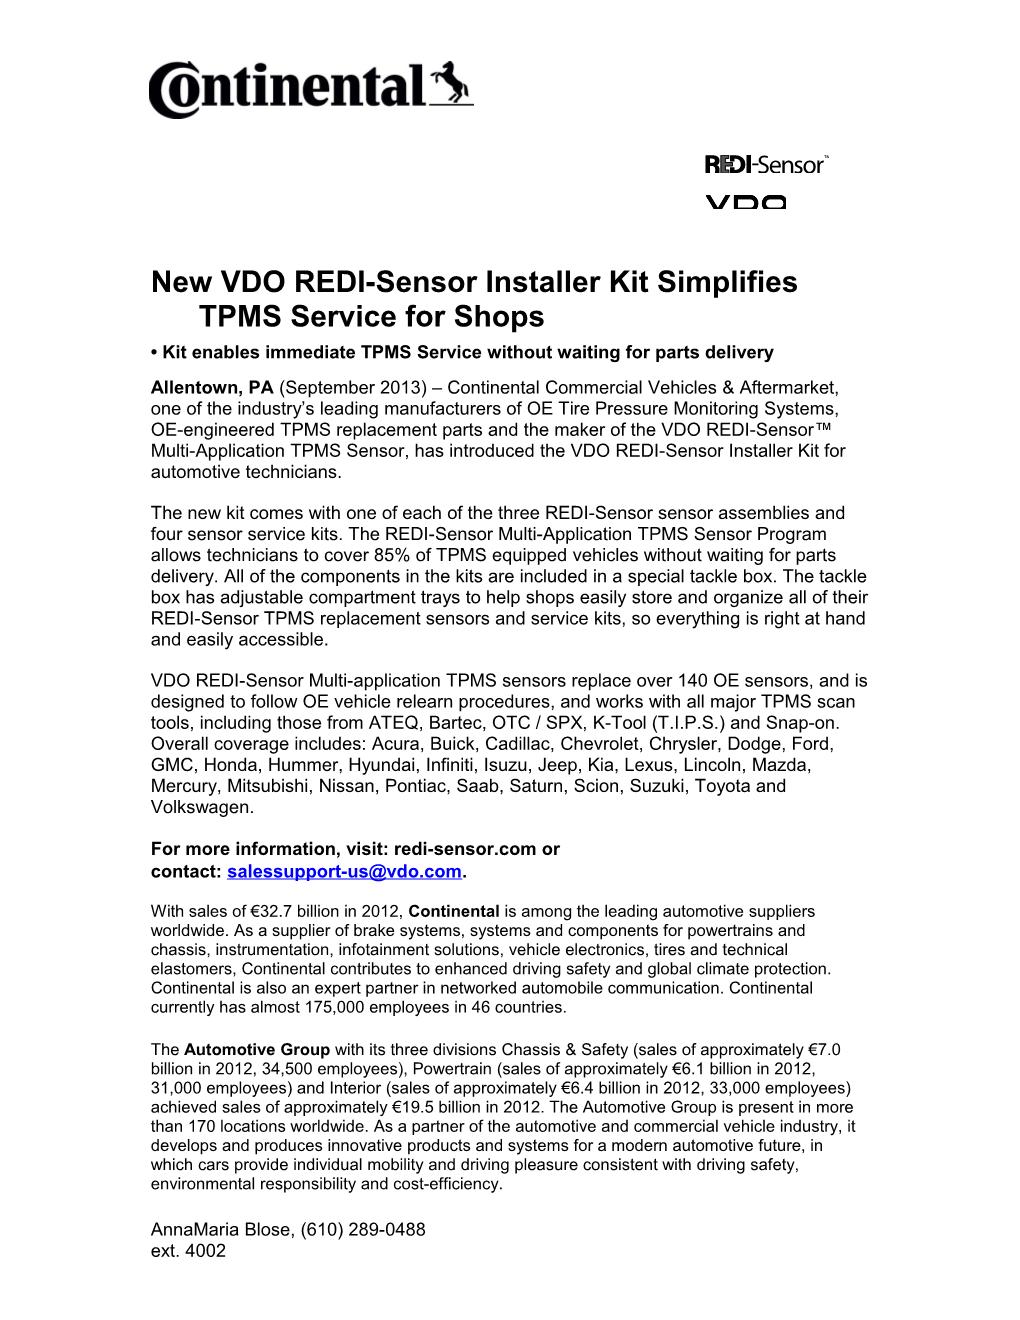 New VDO REDI-Sensor Installer Kit Simplifies TPMS Service for Shops